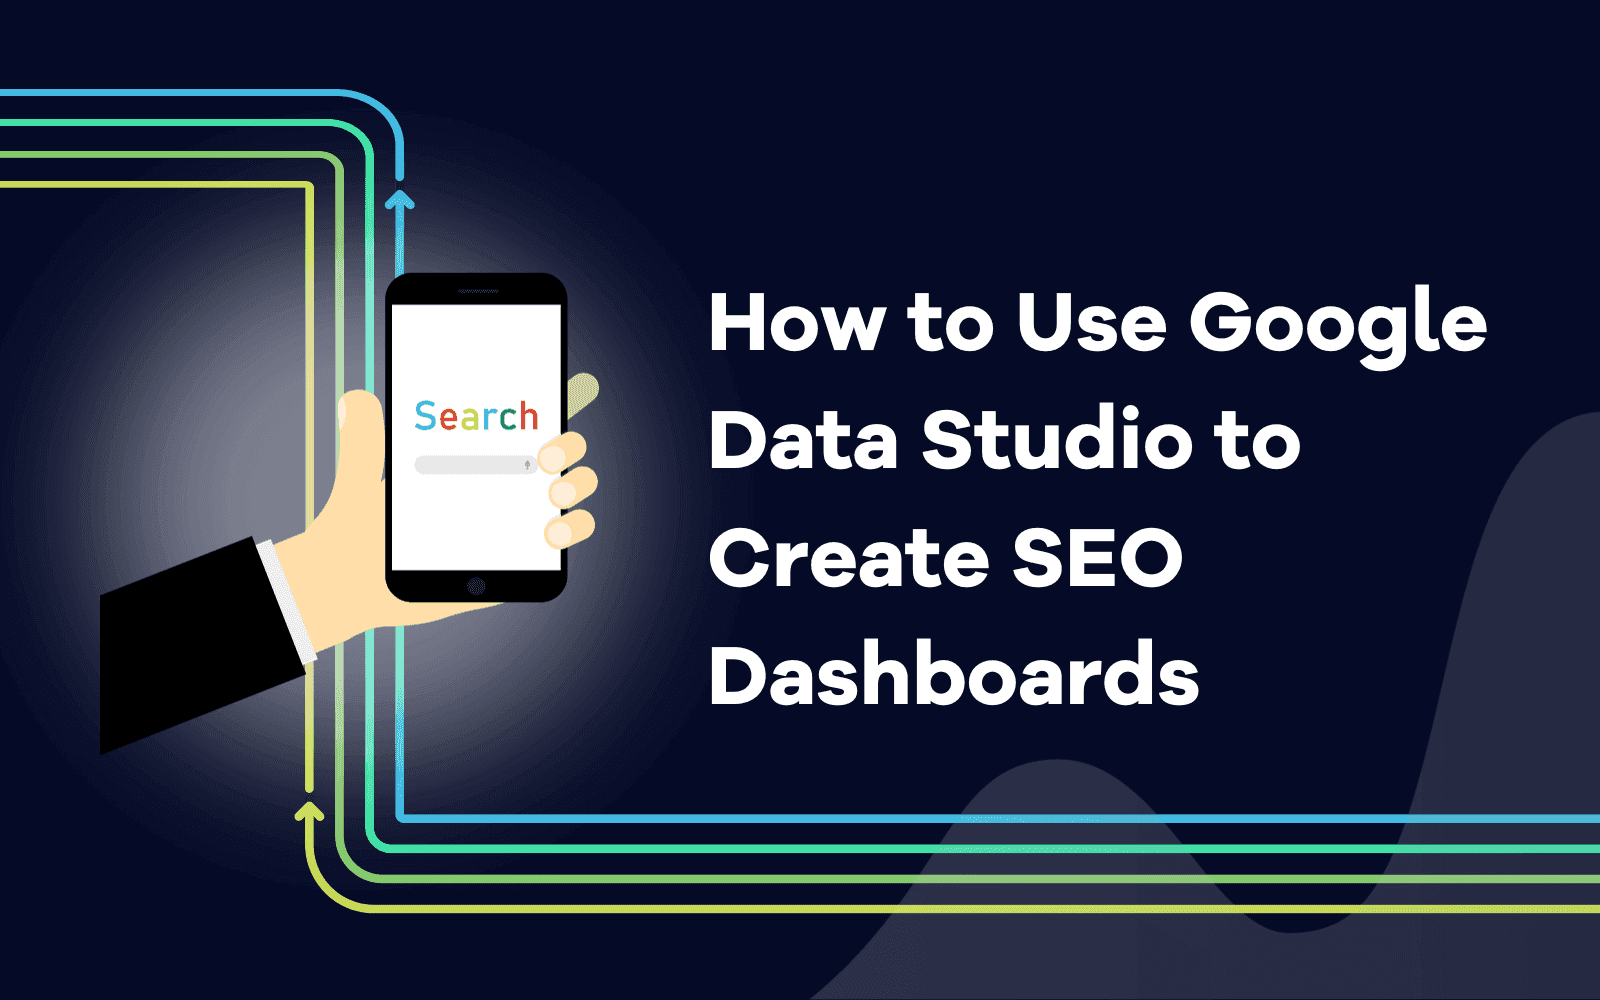 How to Use Google Data Studio to Create SEO Dashboards